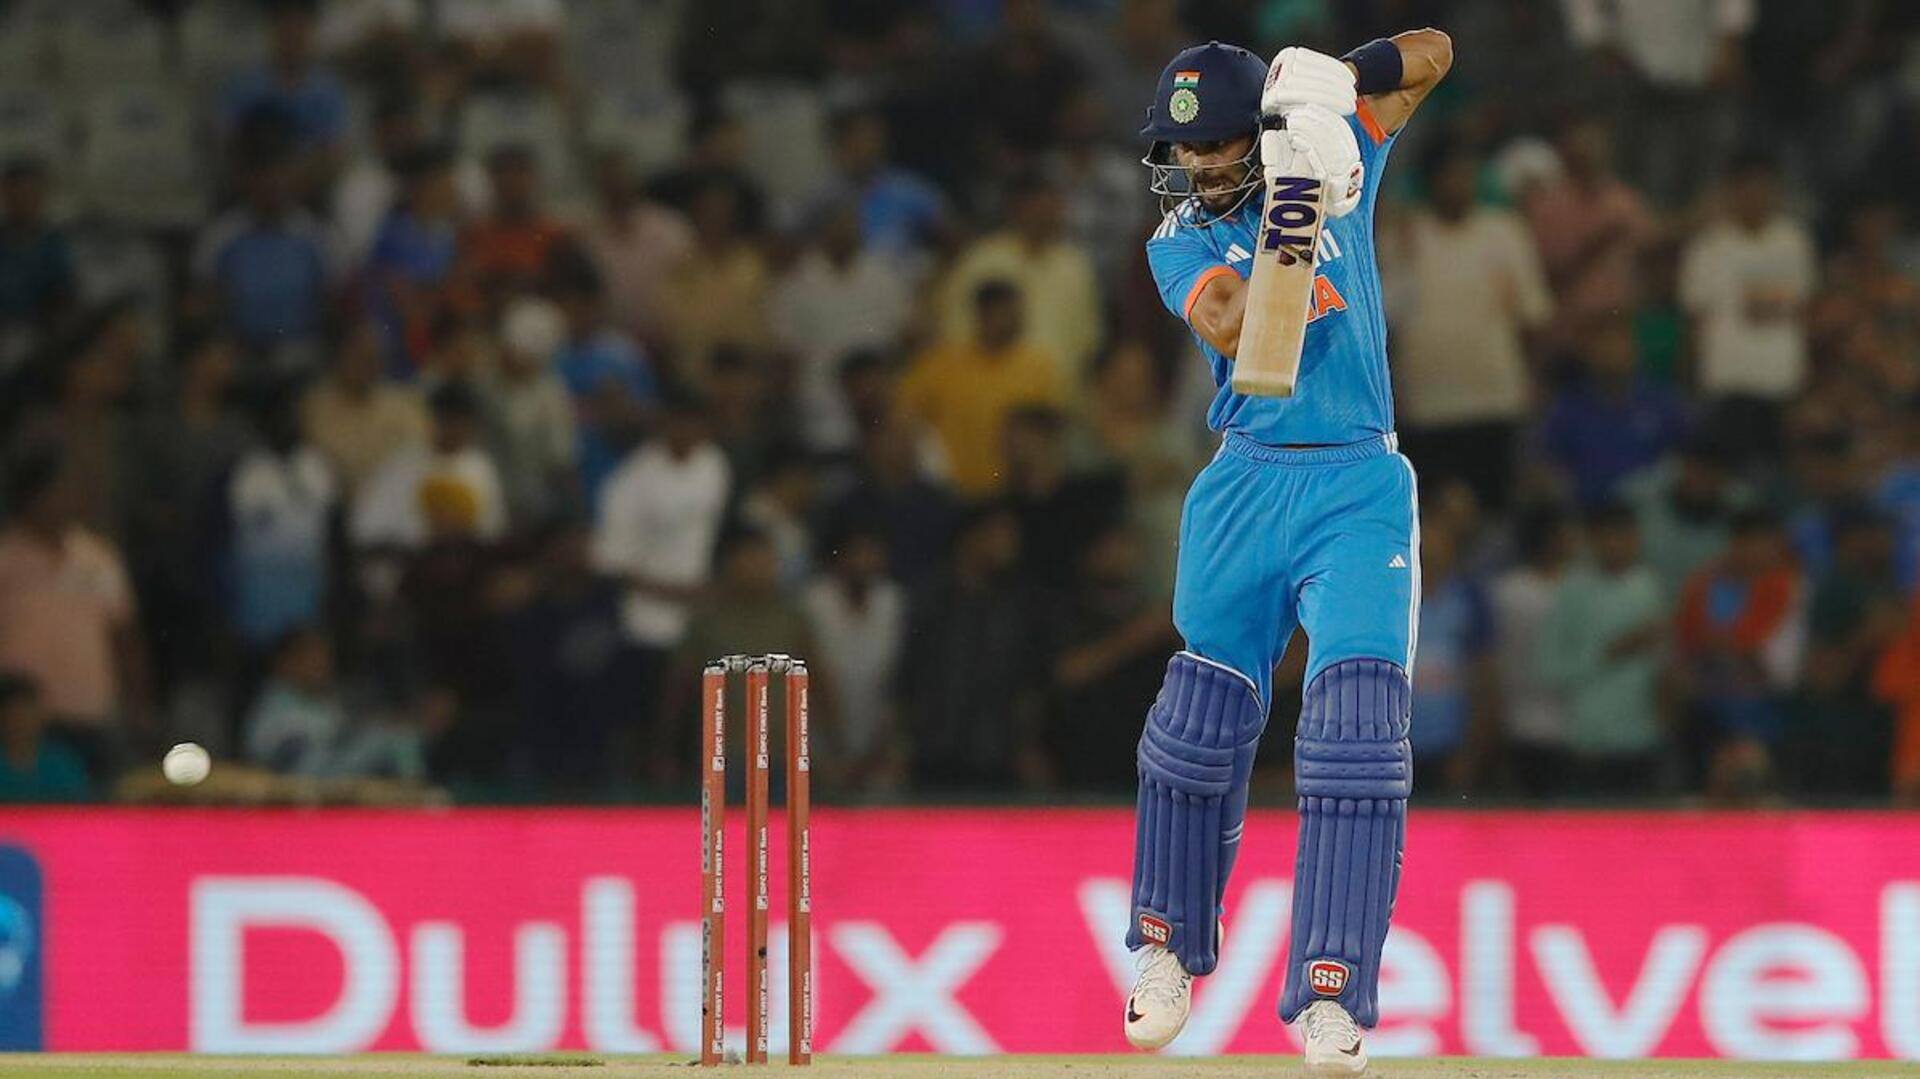 Ruturaj Gaikwad slams his maiden ODI half-century: Key stats1